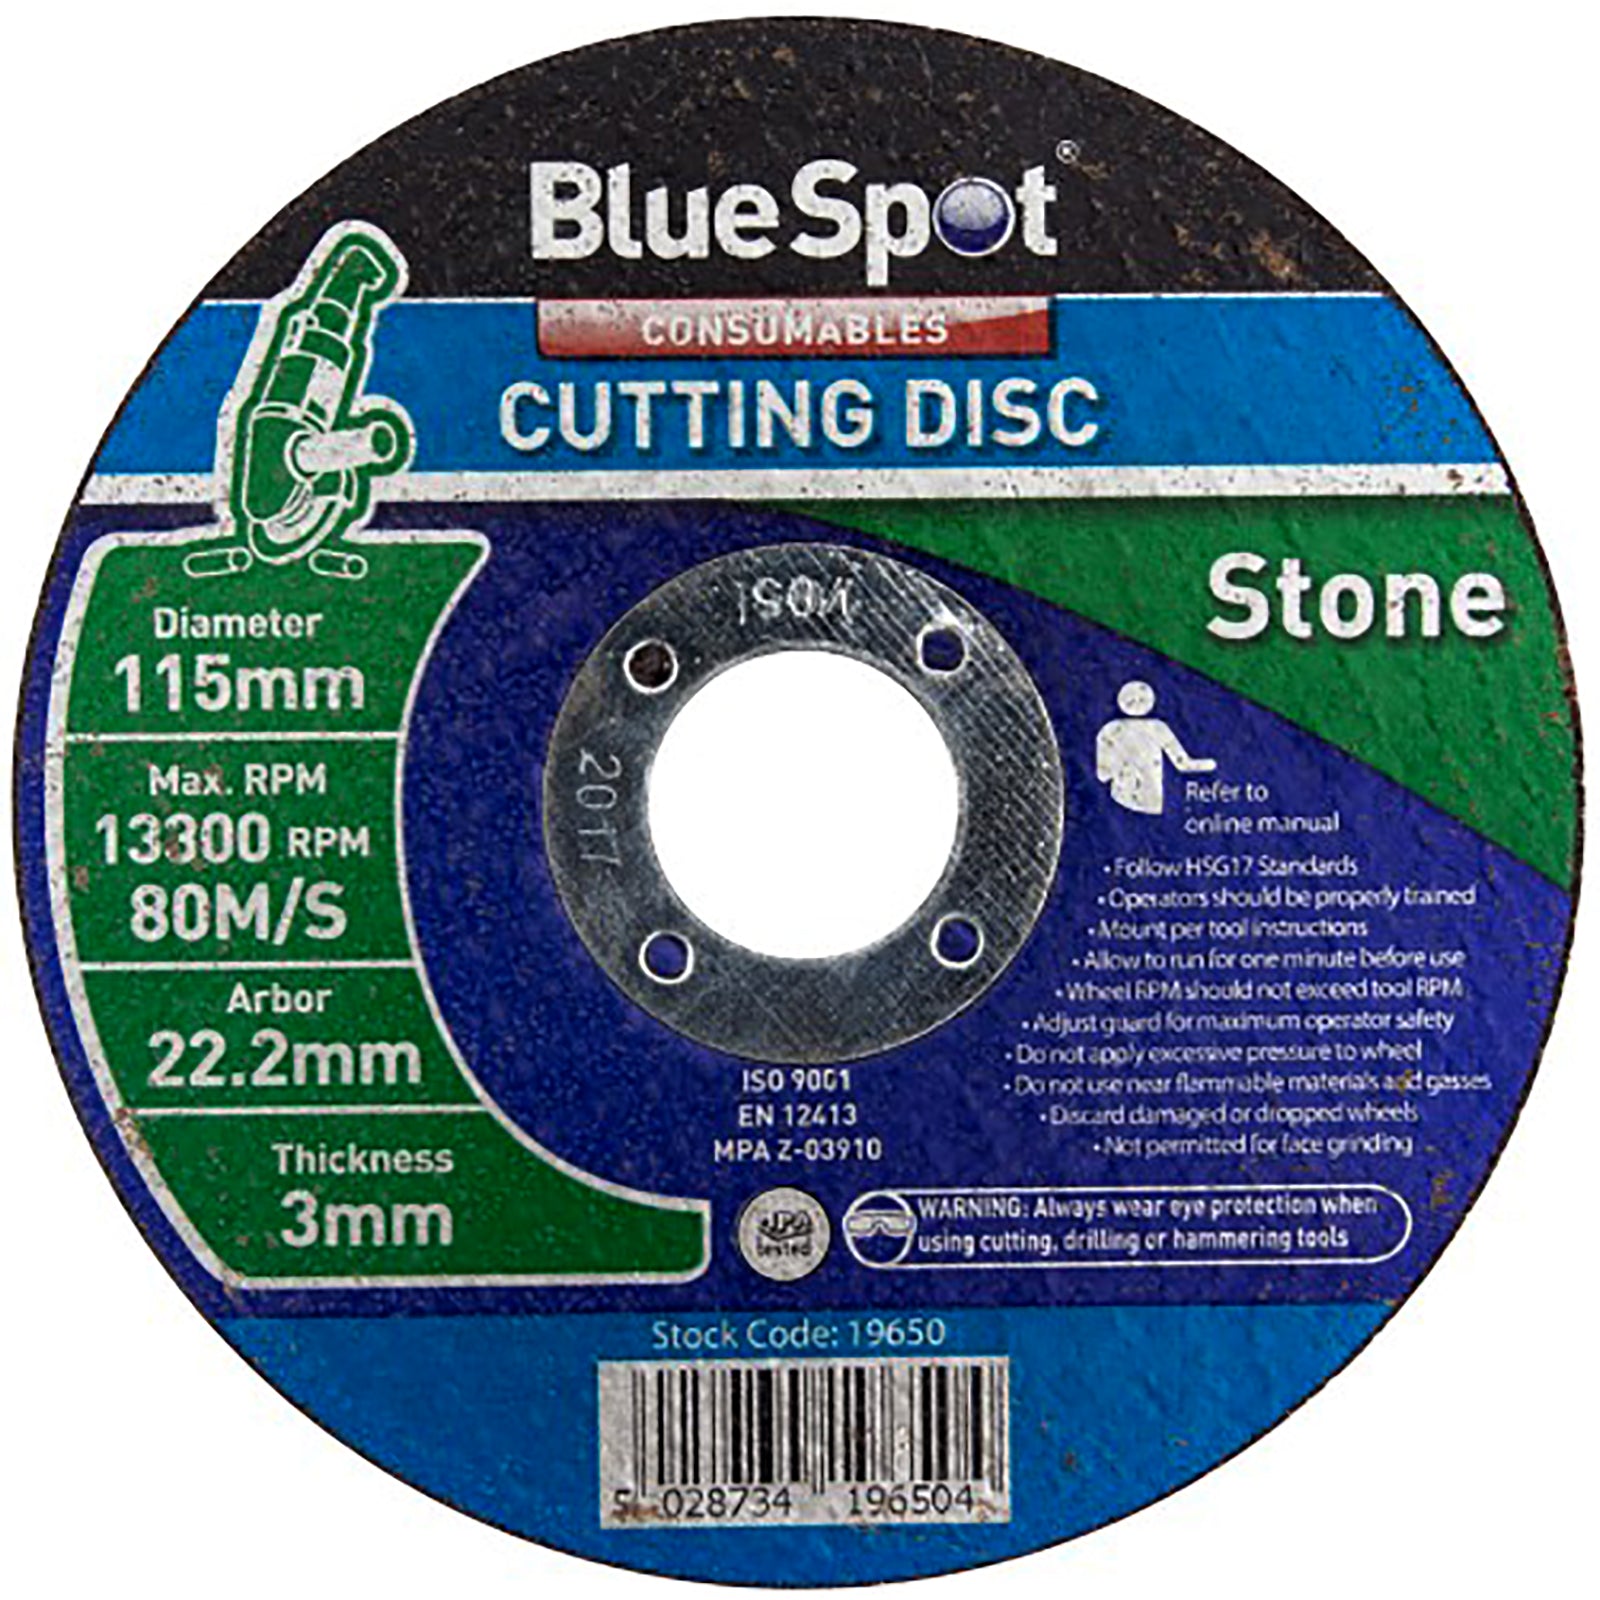 BlueSpot 115mm Stone Cutting Disc 3mm Thickness